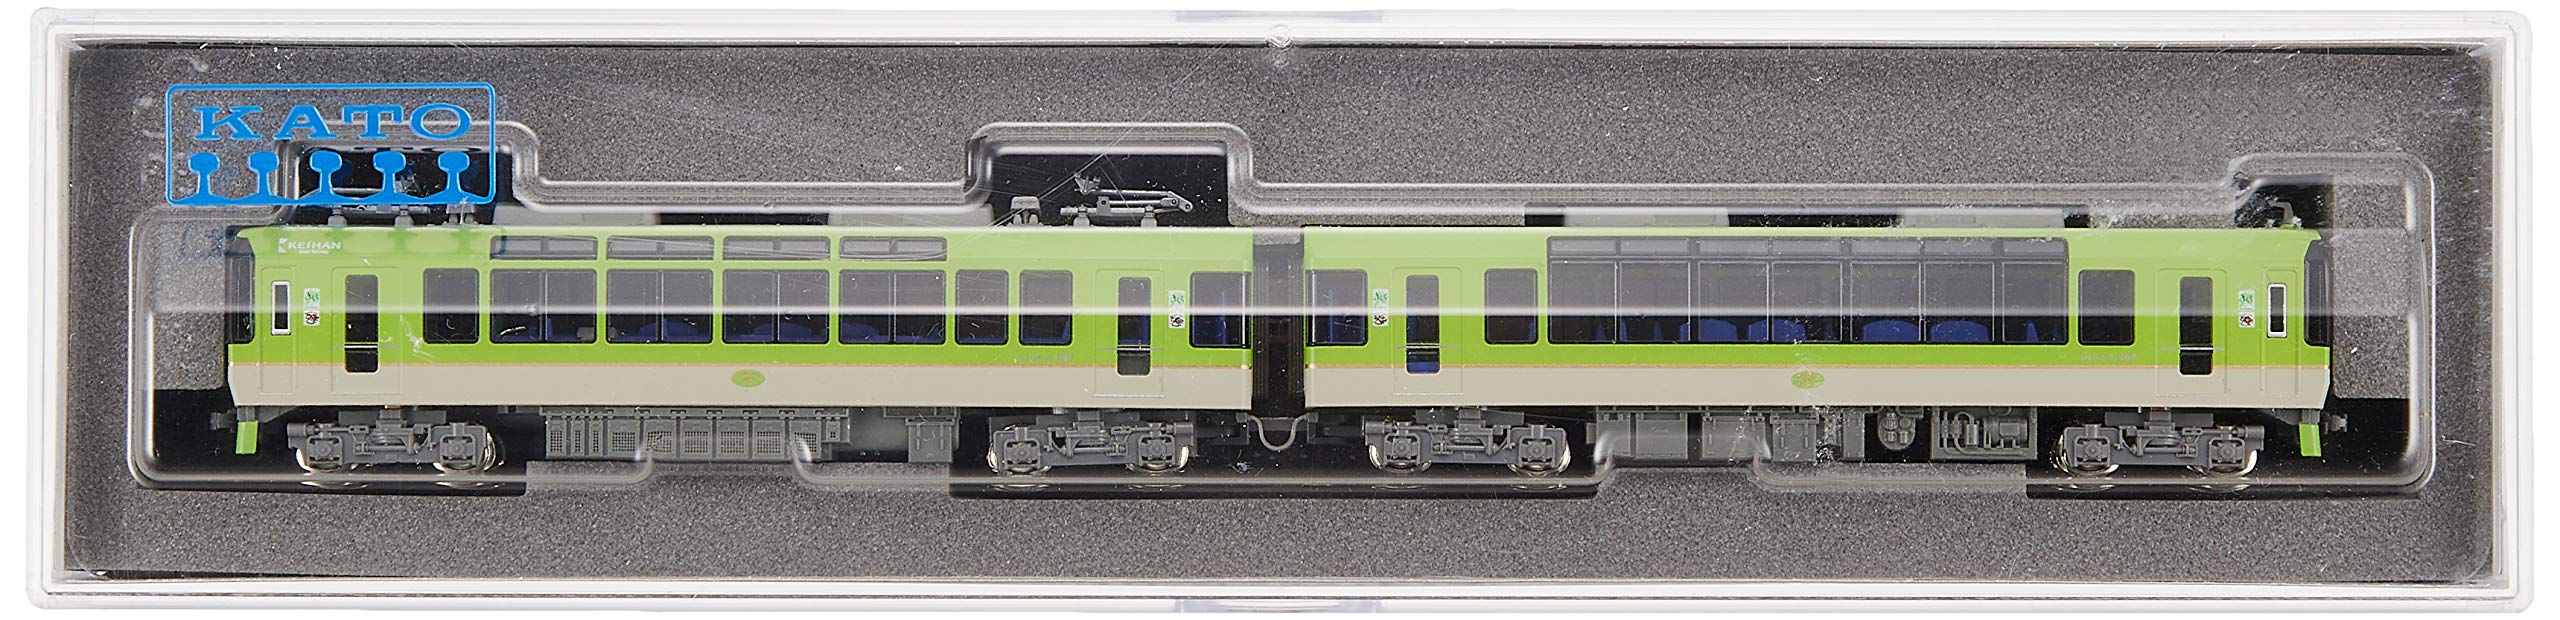 Kato Spur N 900 Serie Eizan Elektrische Eisenbahn Modelleisenbahn - Blau Ahorn Grün